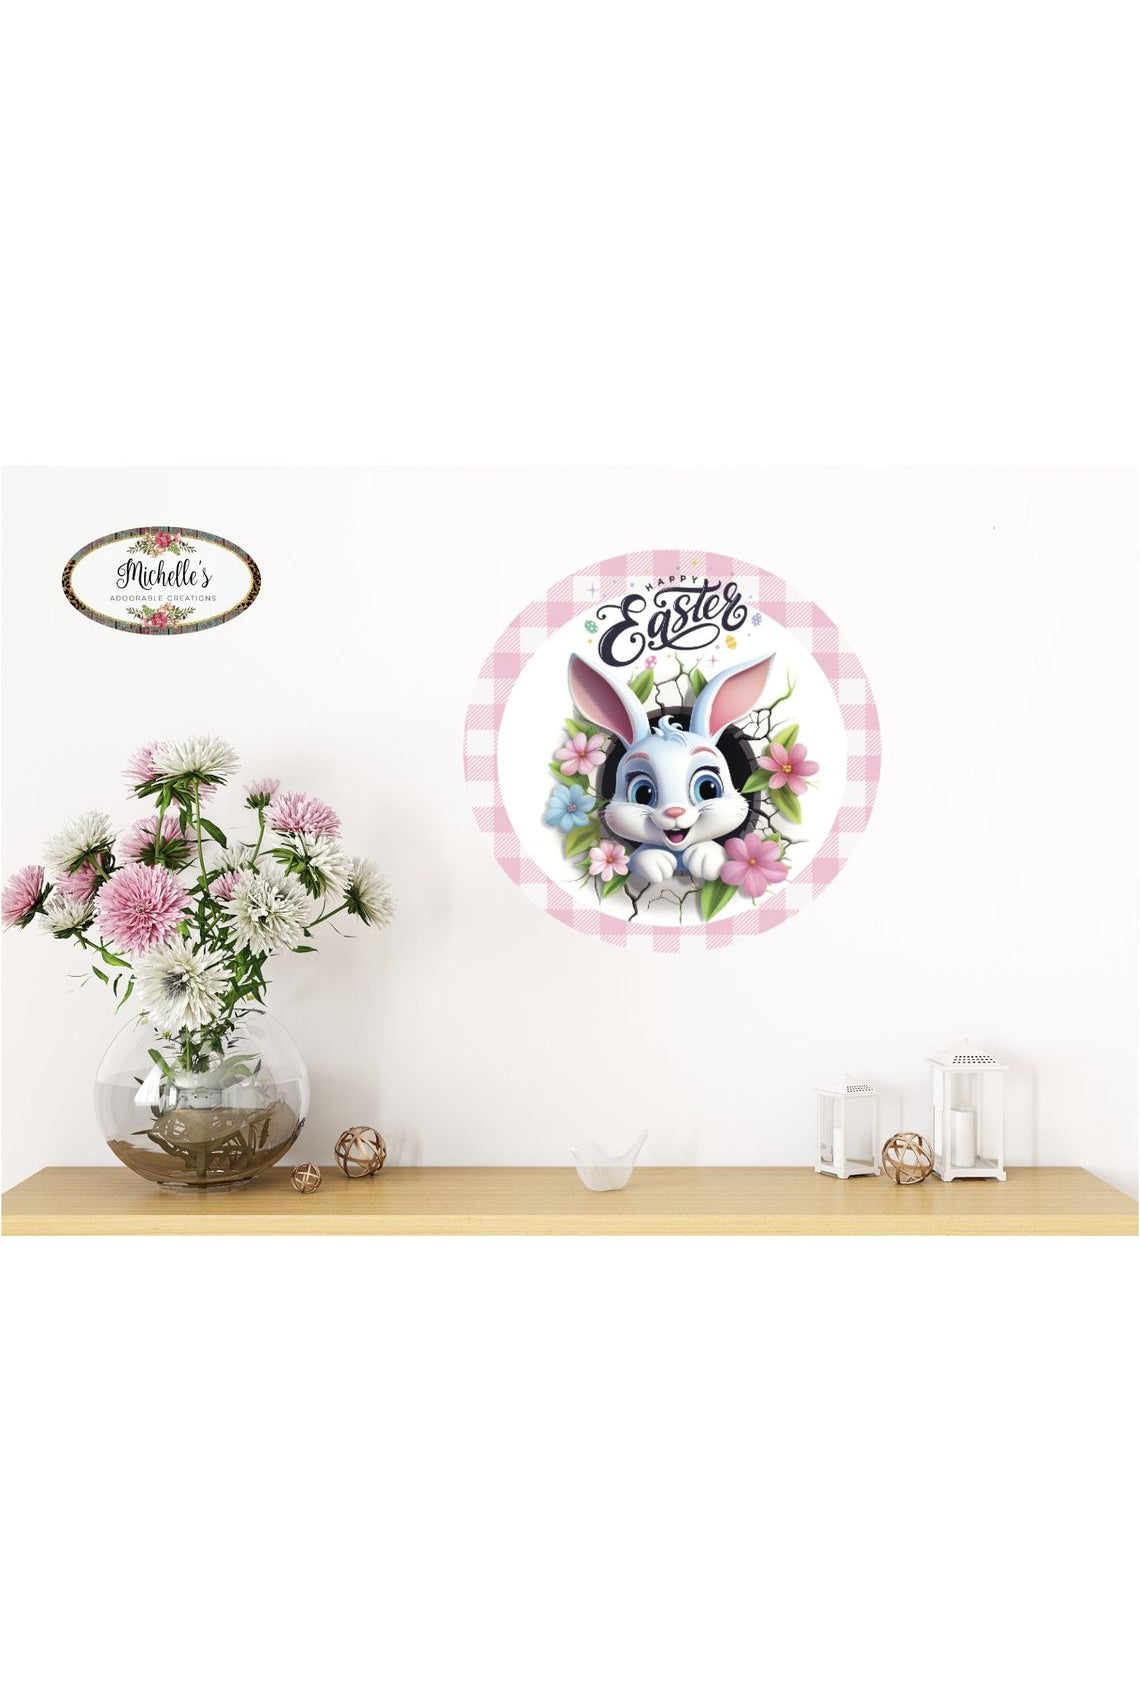 Shop For Happy Easter Faux 3D Bunny Sign - Wreath Enhancement